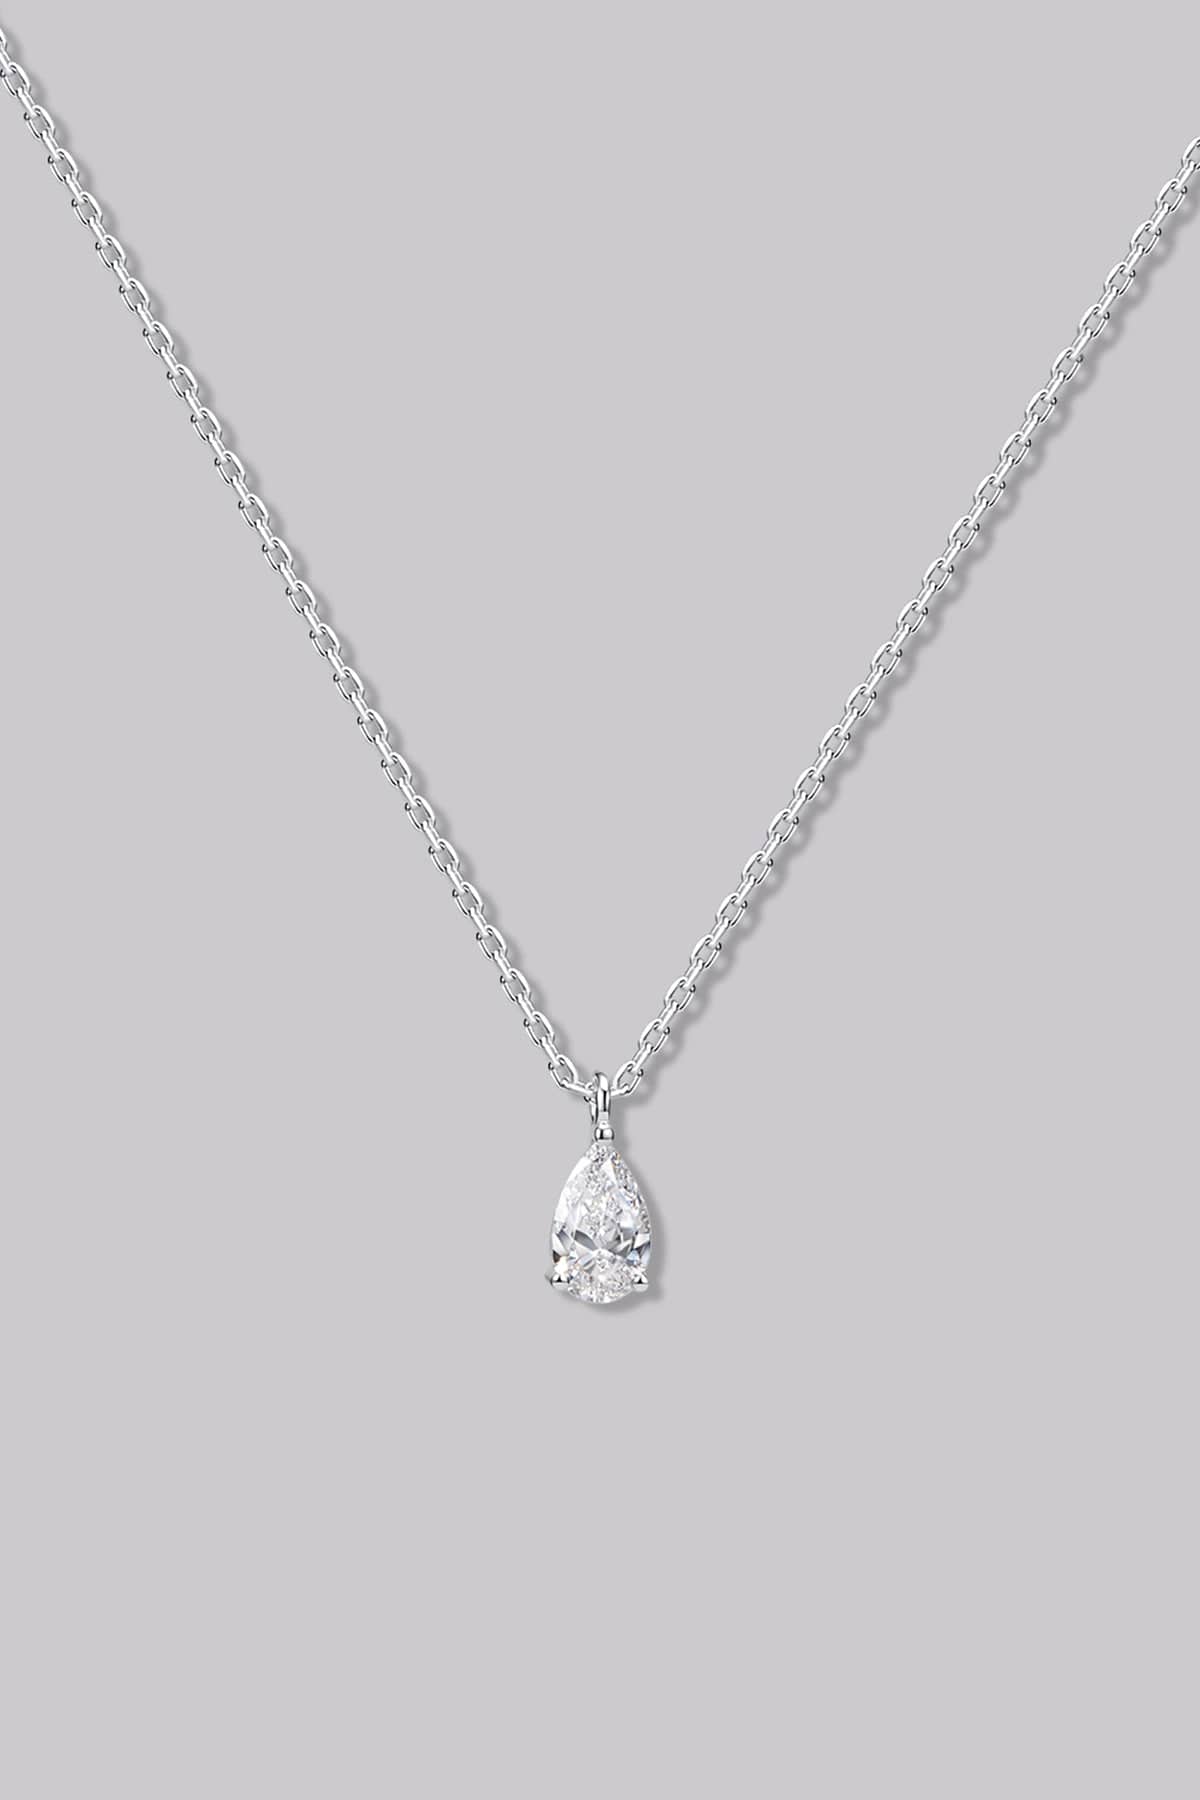 Solitaire Pear Diamond Necklace (0.19ct) - APM Monaco